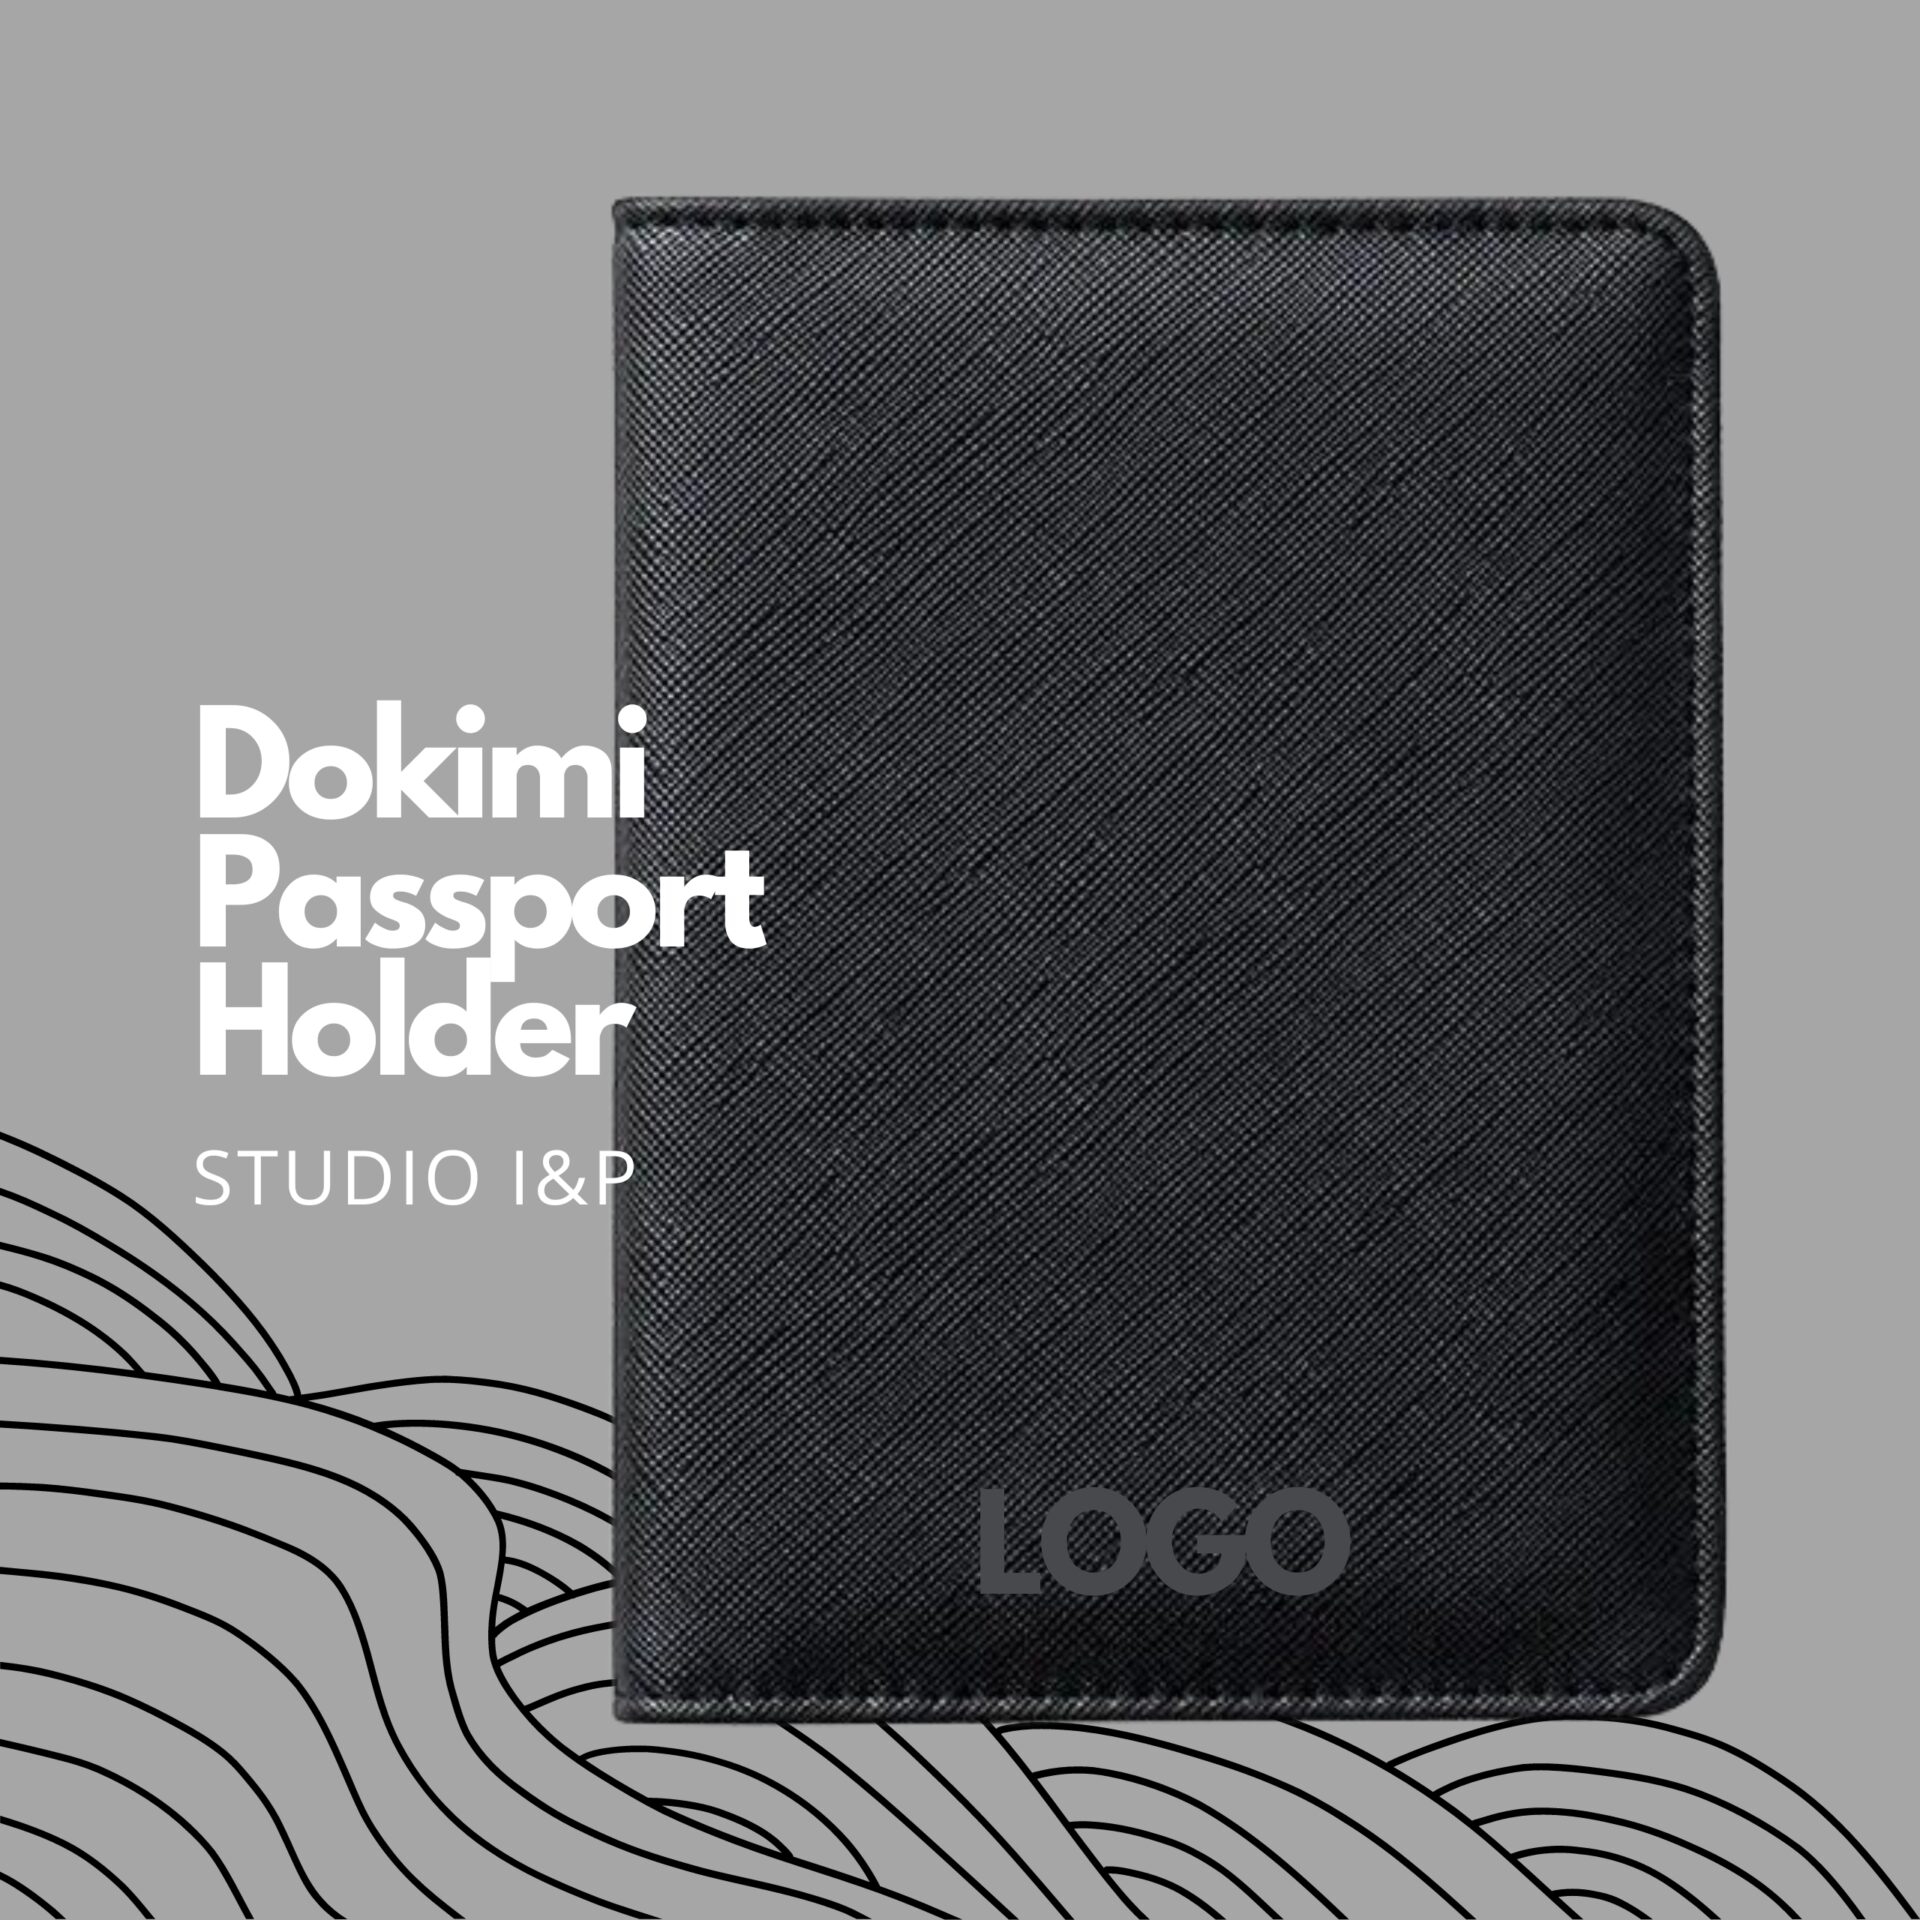 Corporate Gifts Singapore Passport Holder Leather Dokimi